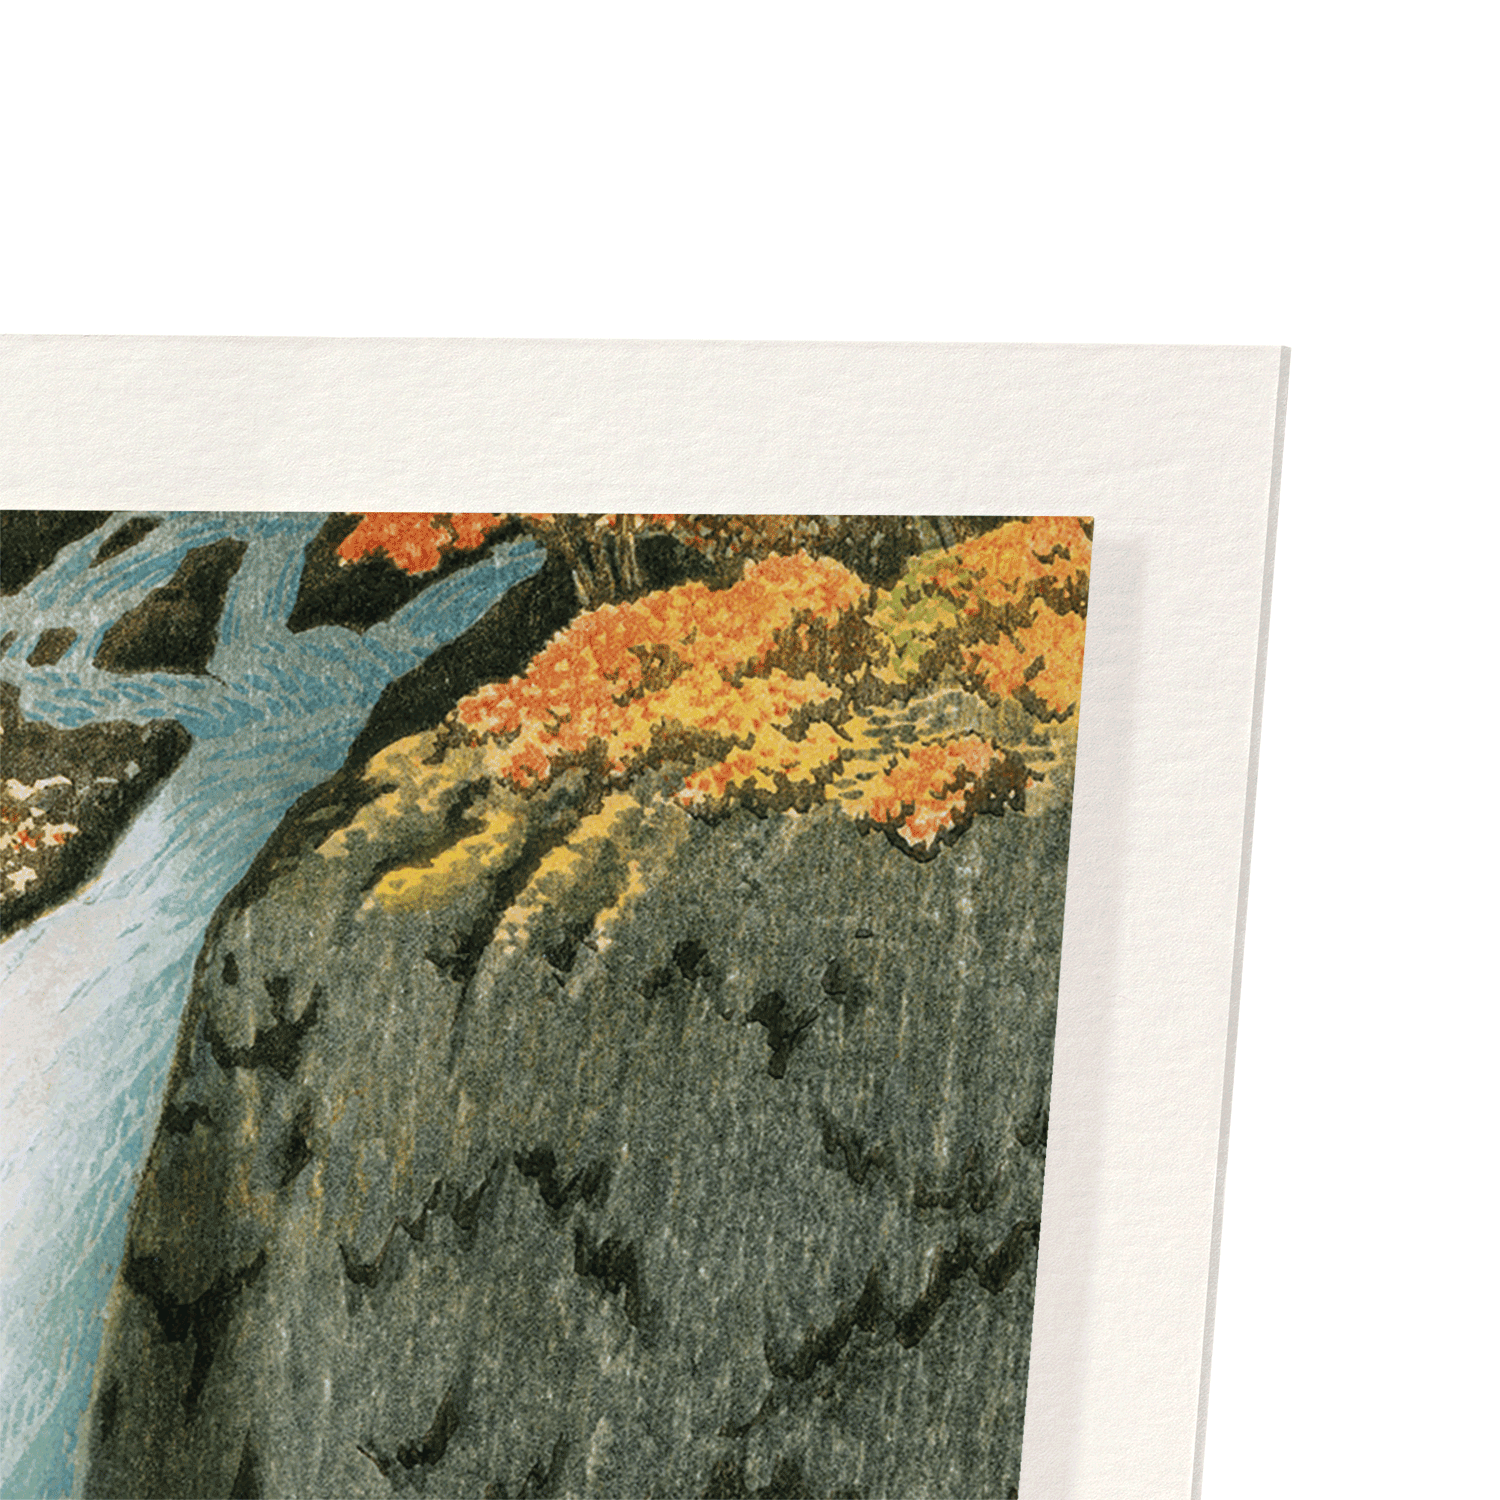 NIKKO WATERFALL: Japanese Art Print